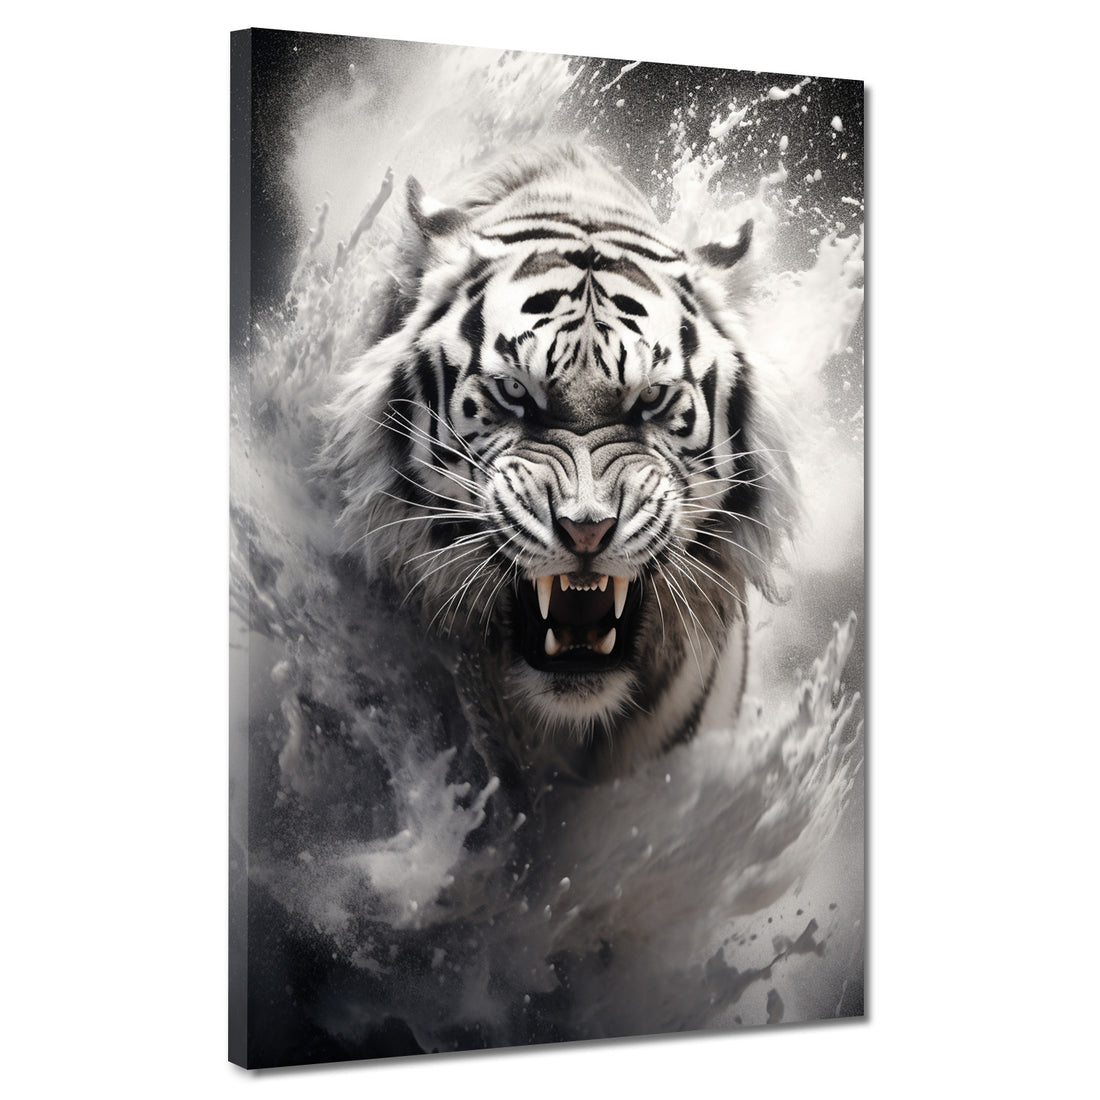 Wandbild Tiger frontal schwarz weiß